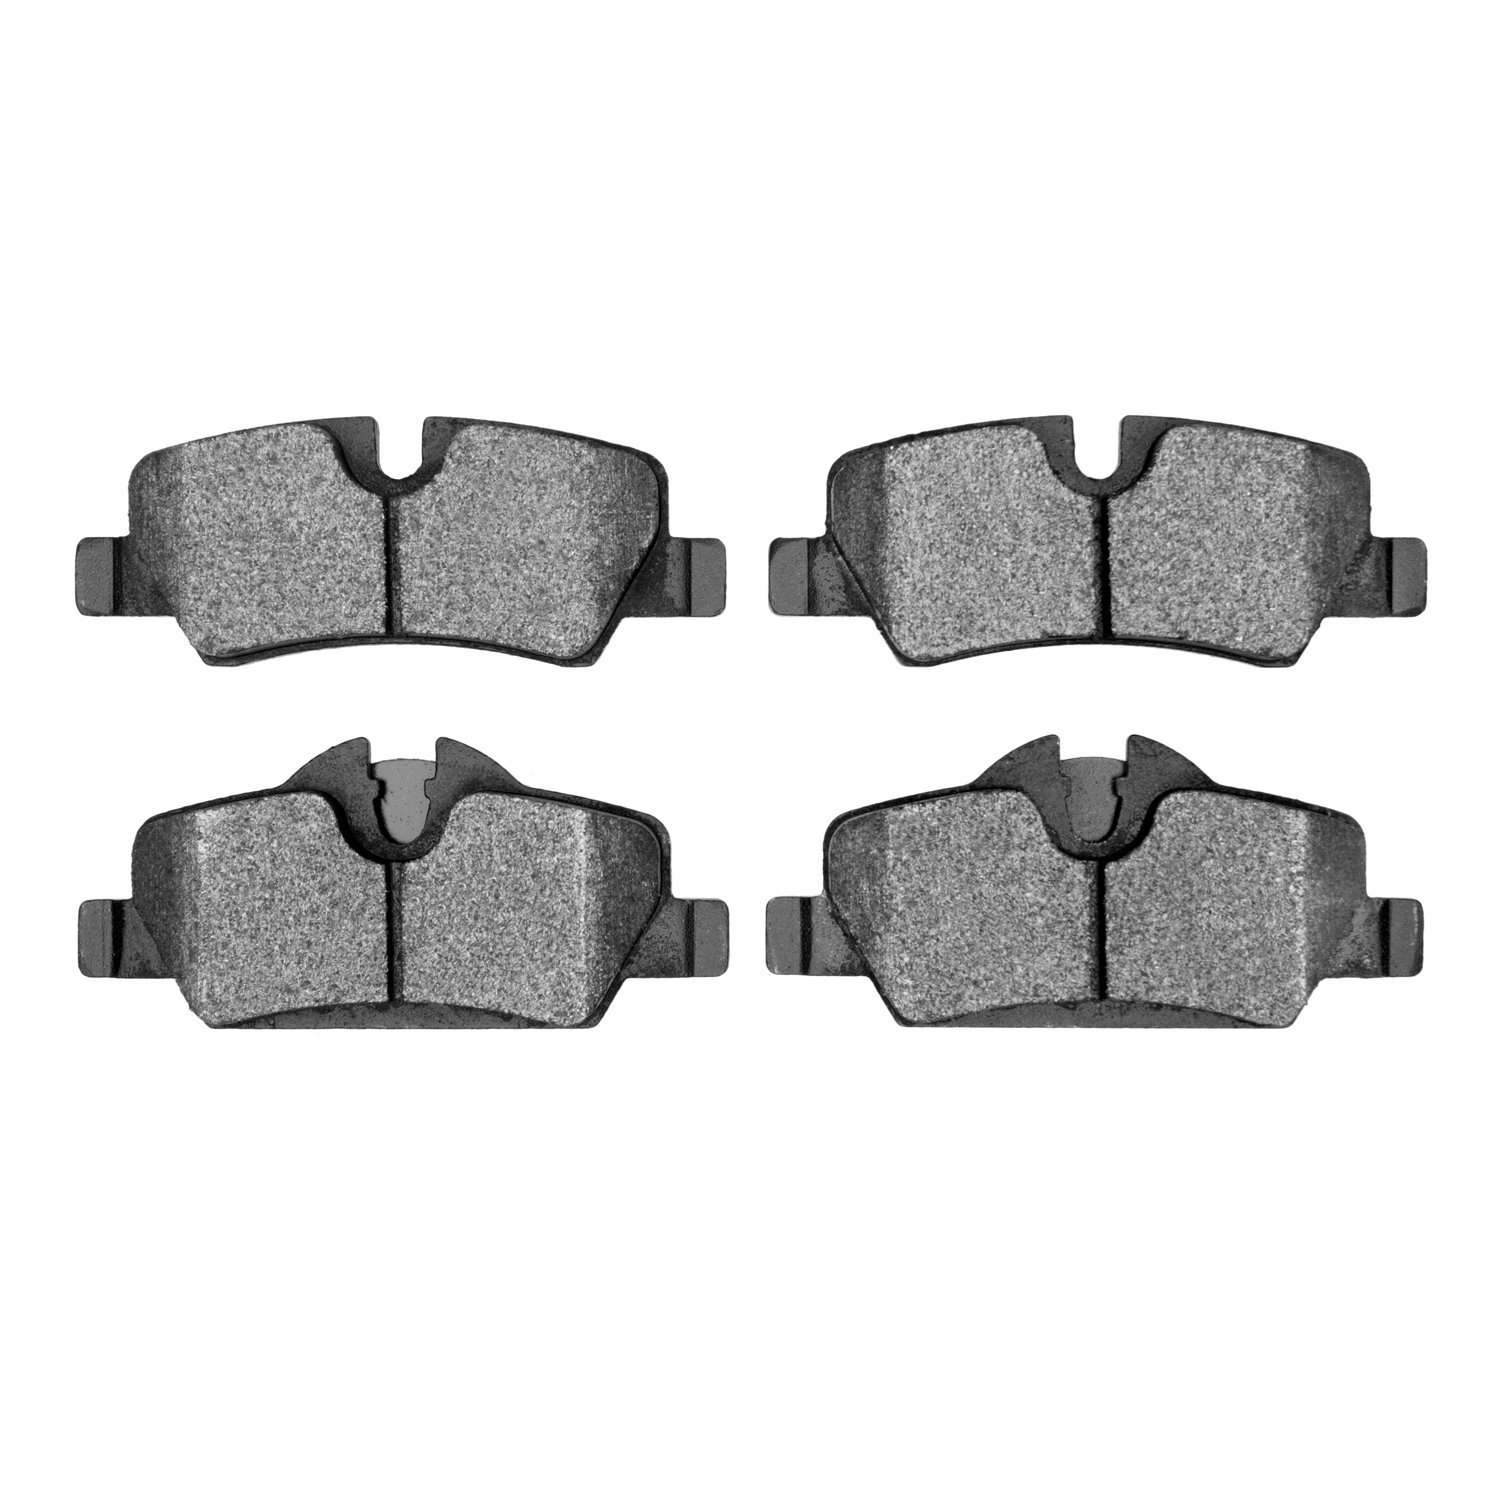 Semi-Metallic Brake Pads, Fits Select Mini, Position: Rear